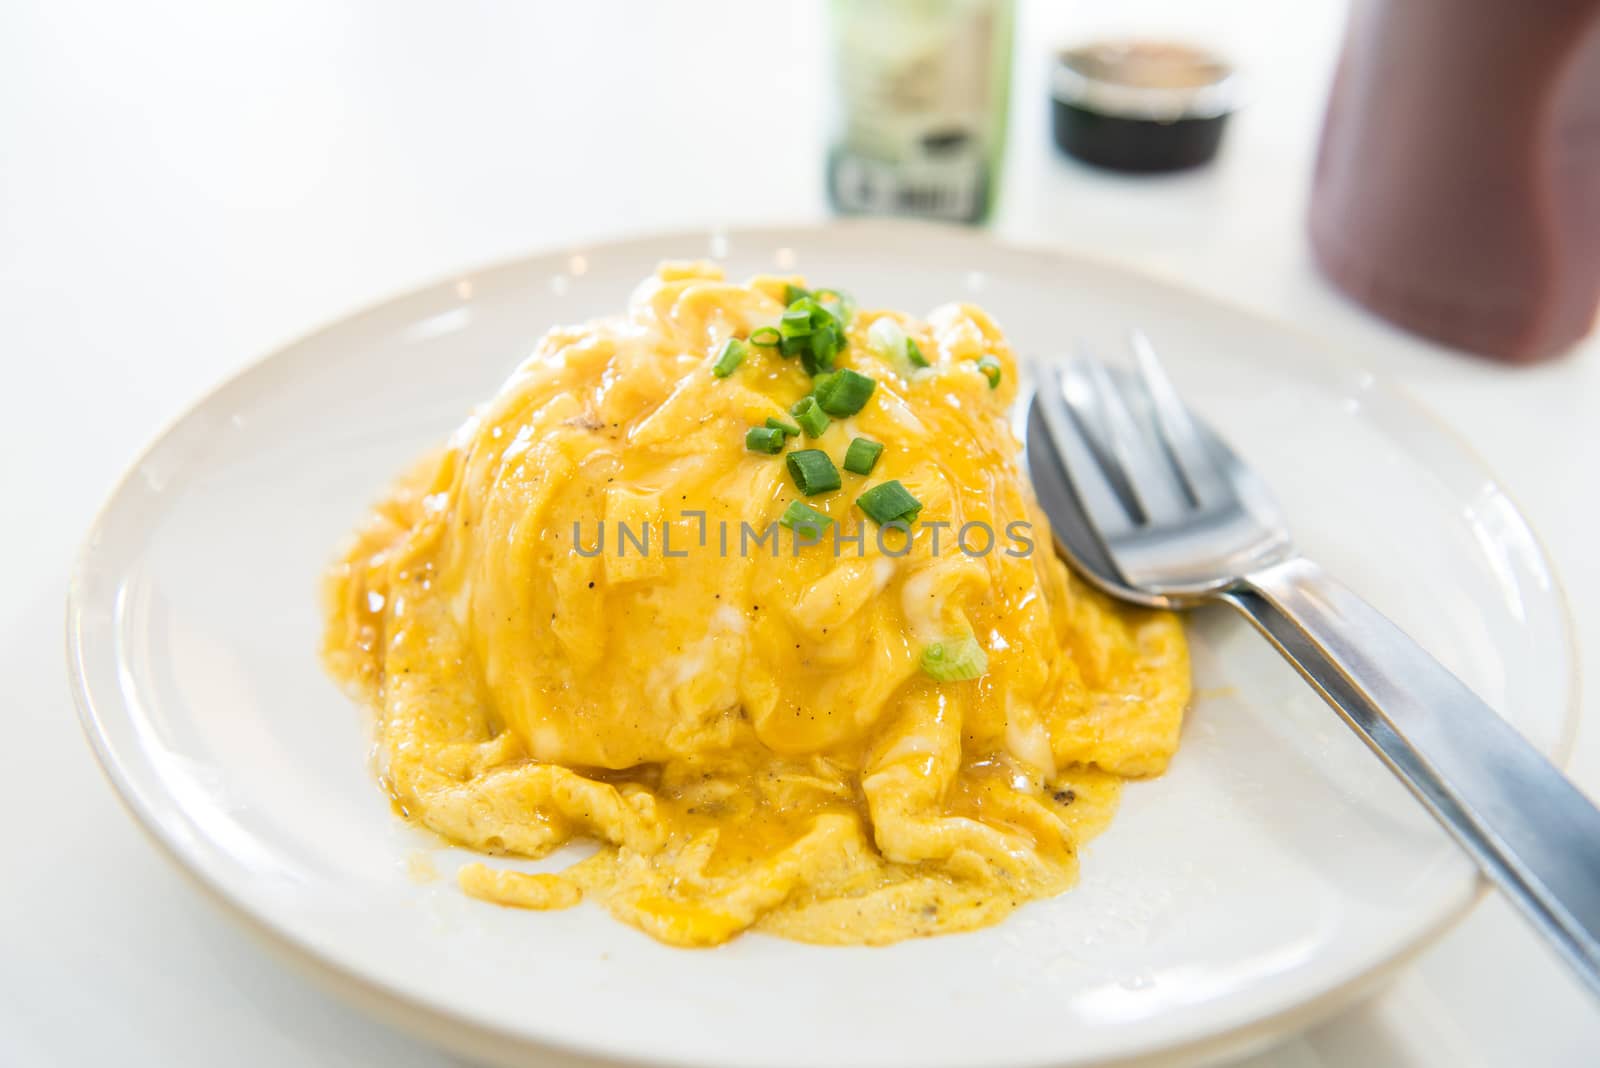 creamy omelet on rice  by opasstudio